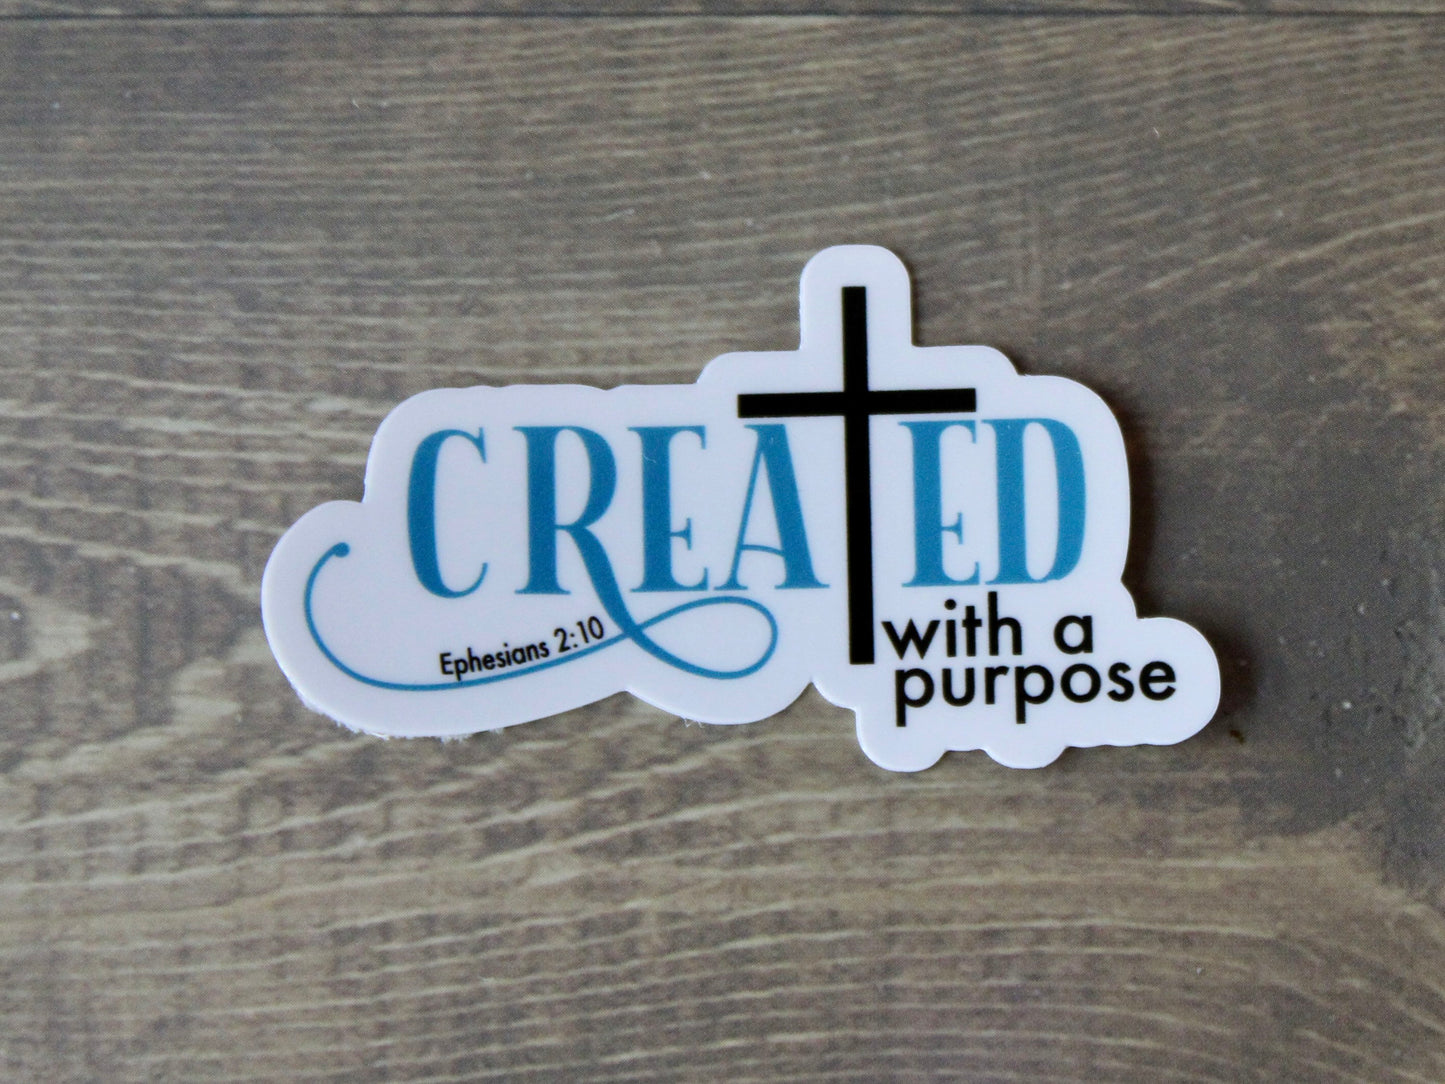 Created with a Purpose - Ephesians 2:10 - Christian Faith UV/ Waterproof Vinyl Sticker/ Decal- Choice of Size, Single or Bulk qty